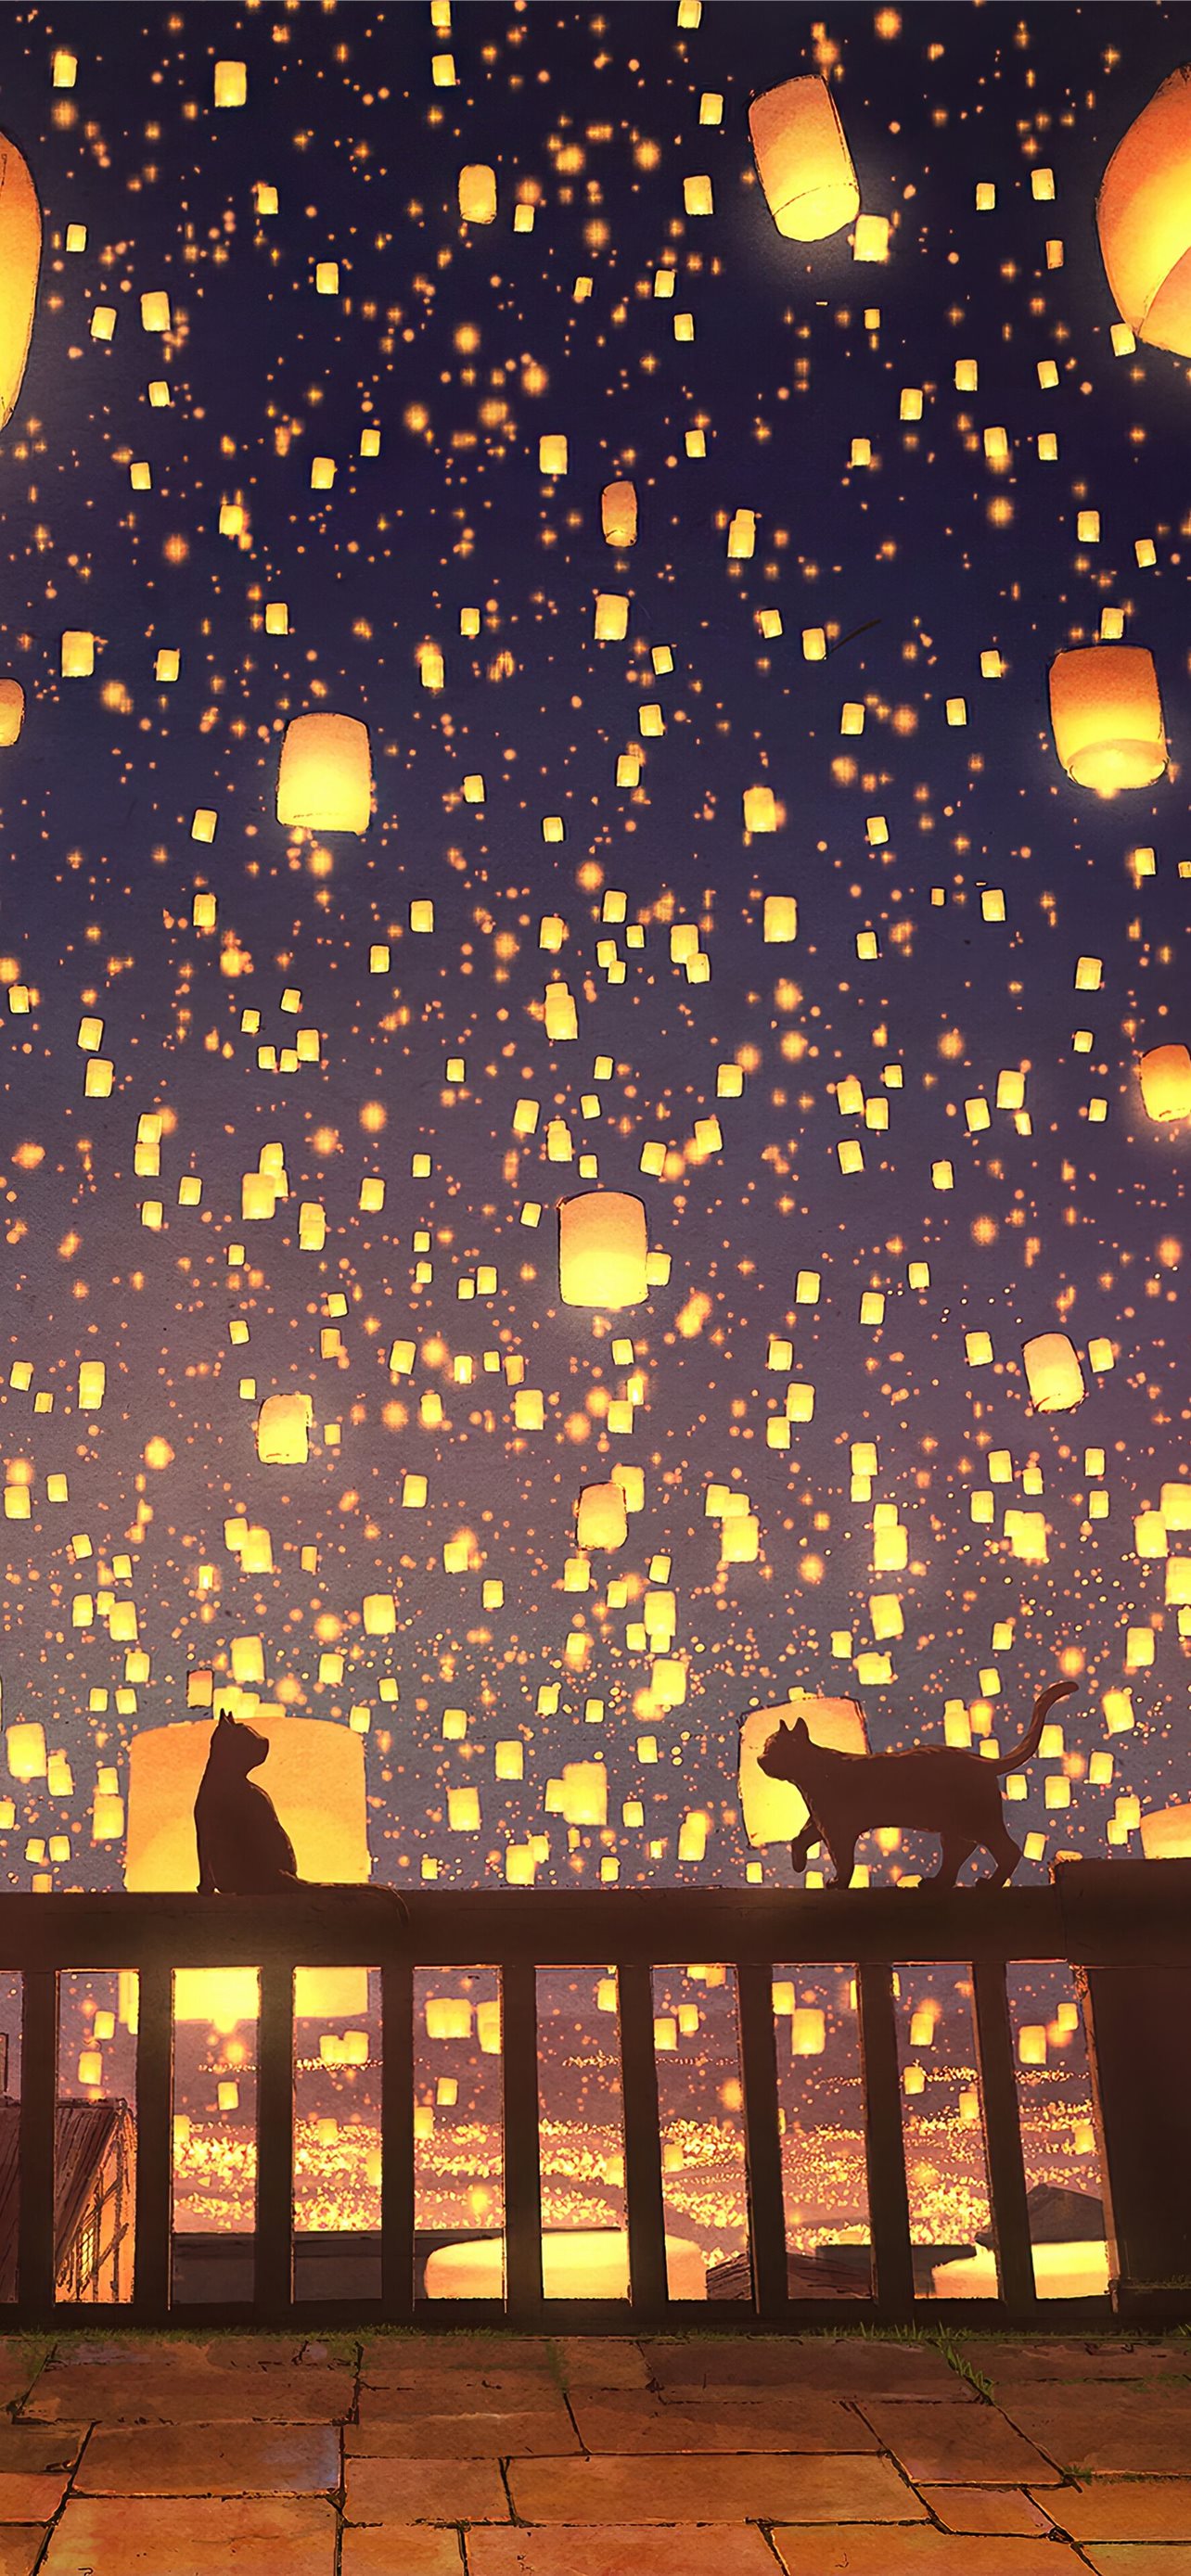 Floating Lanterns Festival iPhone Wallpaper